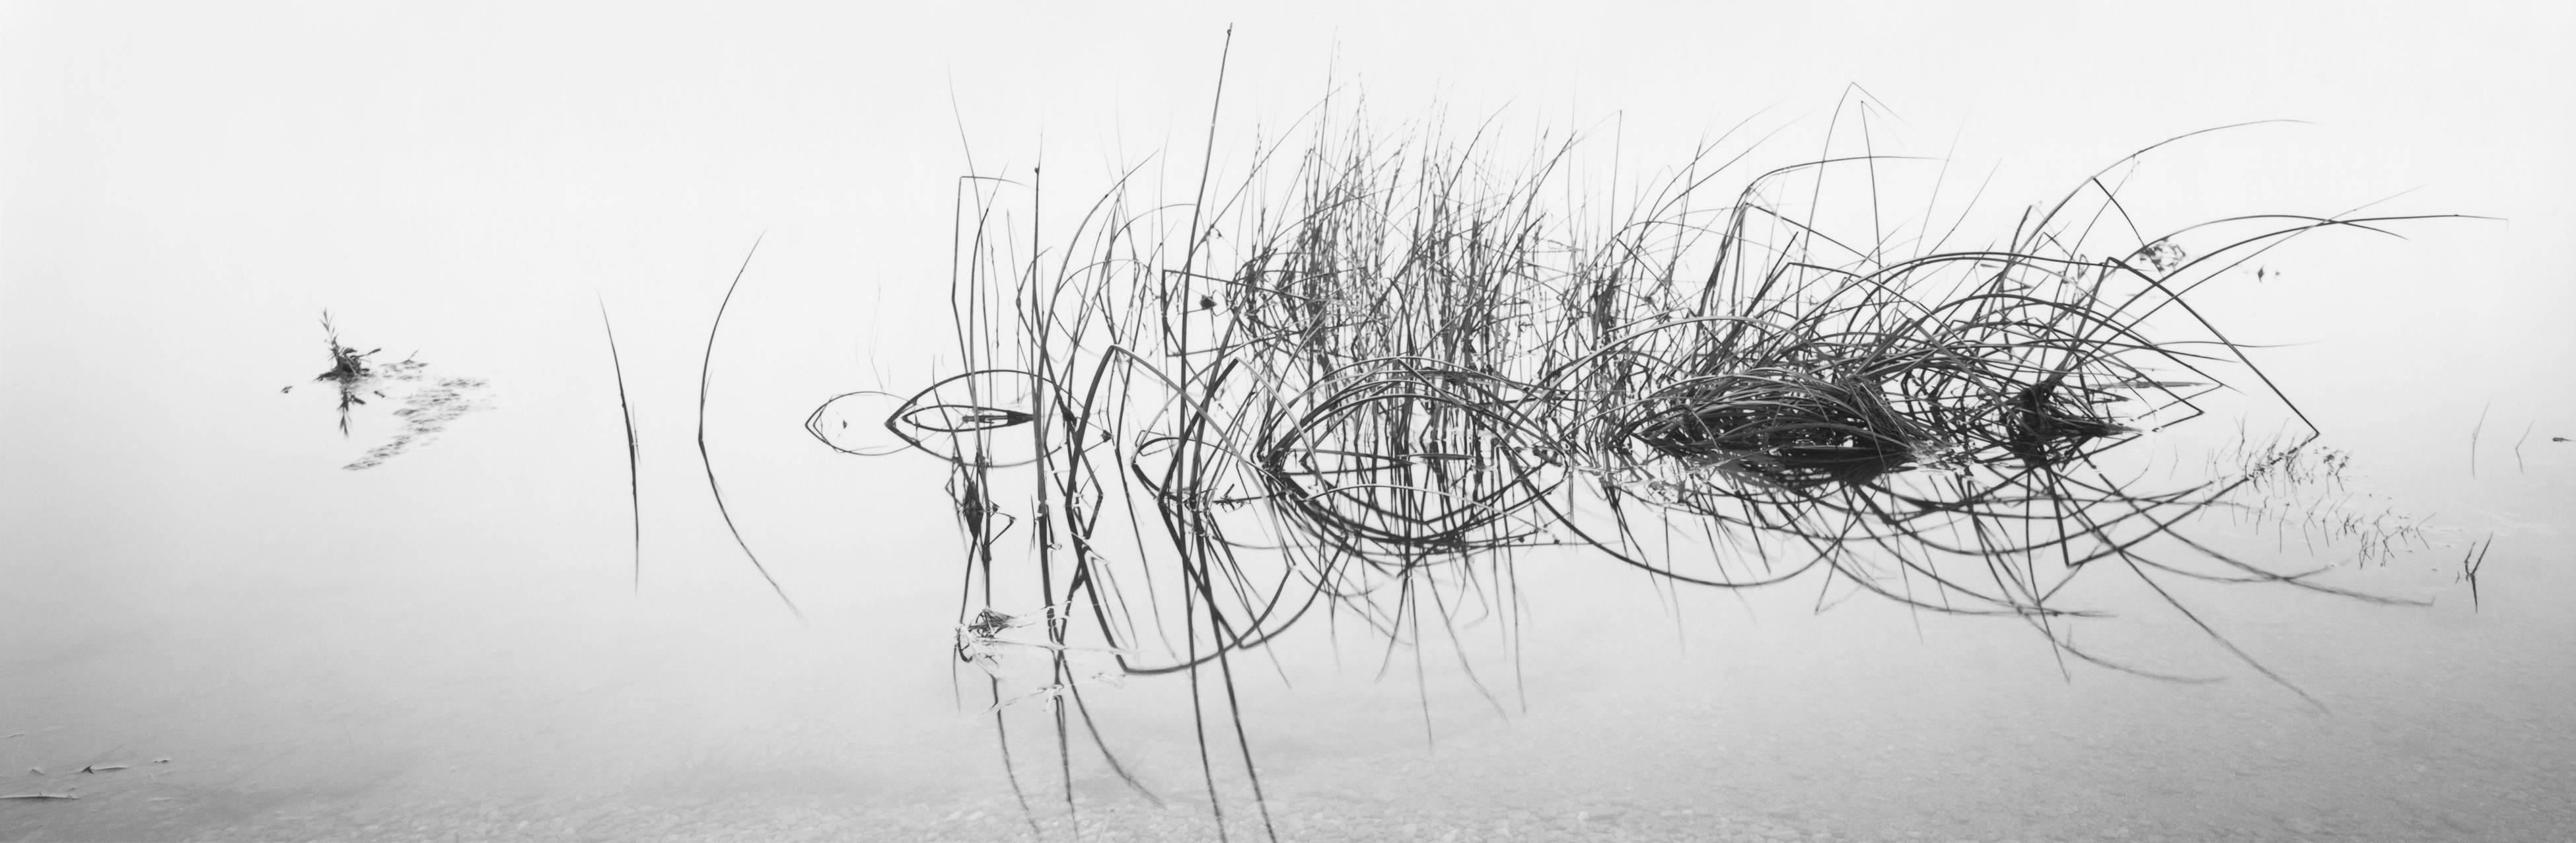 David H. Gibson Black and White Photograph - Reed Crescendo, Eagle Nest Lake, New Mexico 